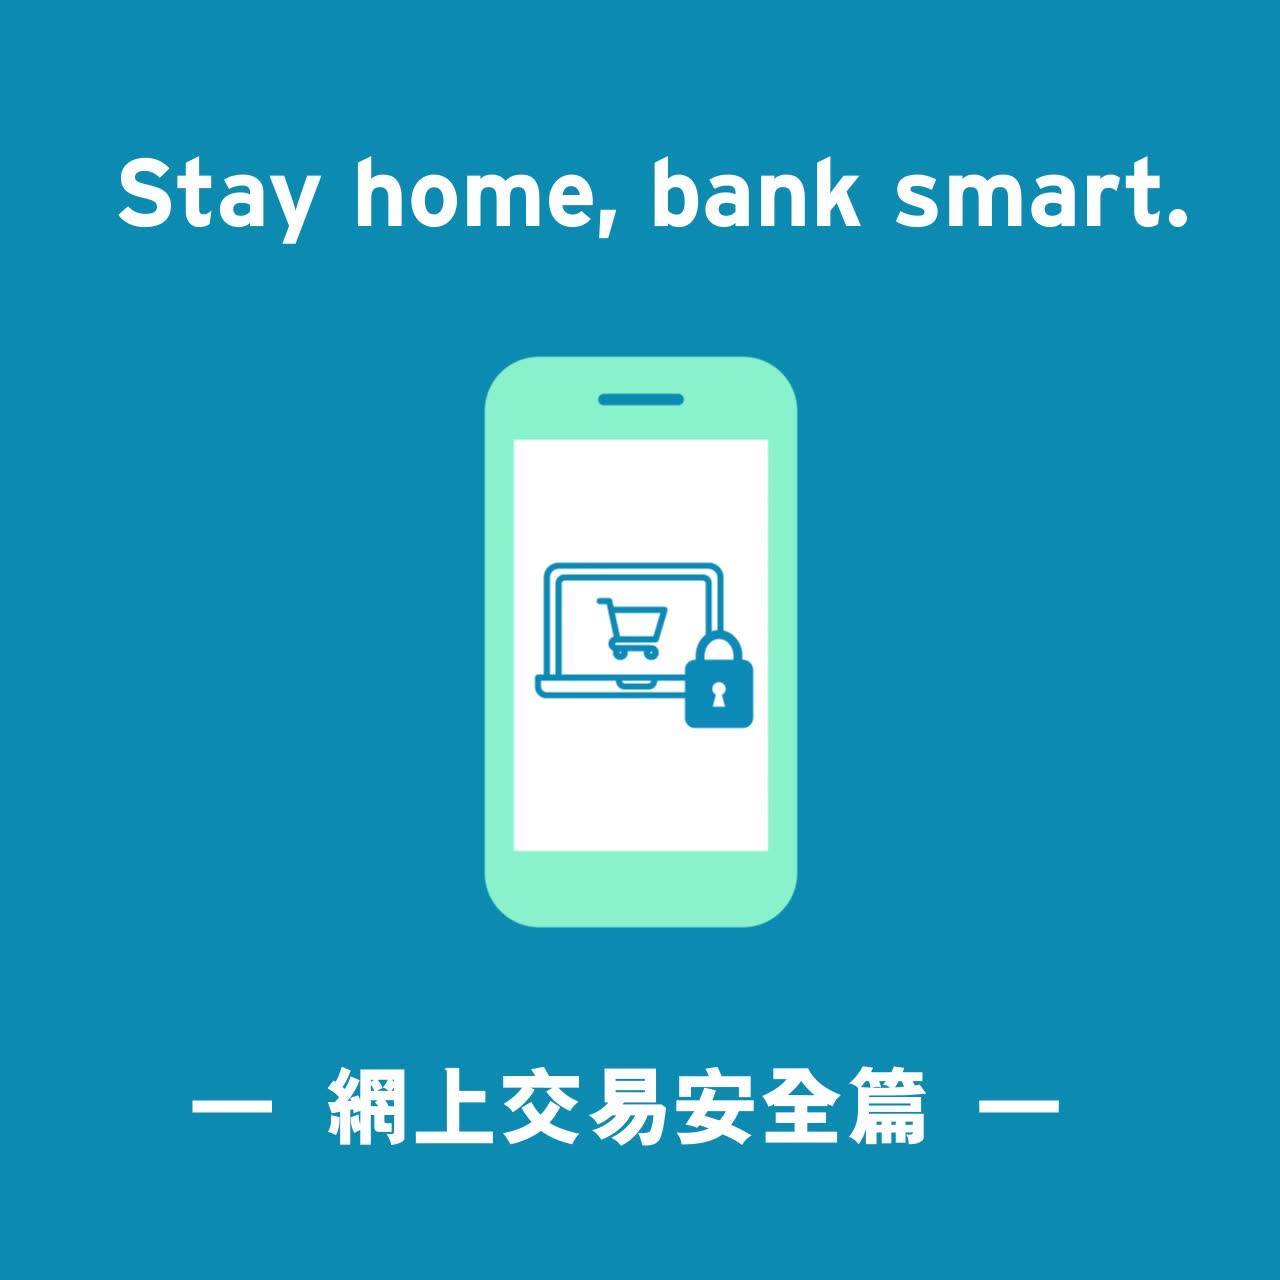 【”Stay home, bank smart.” – 網上交易安全篇】 